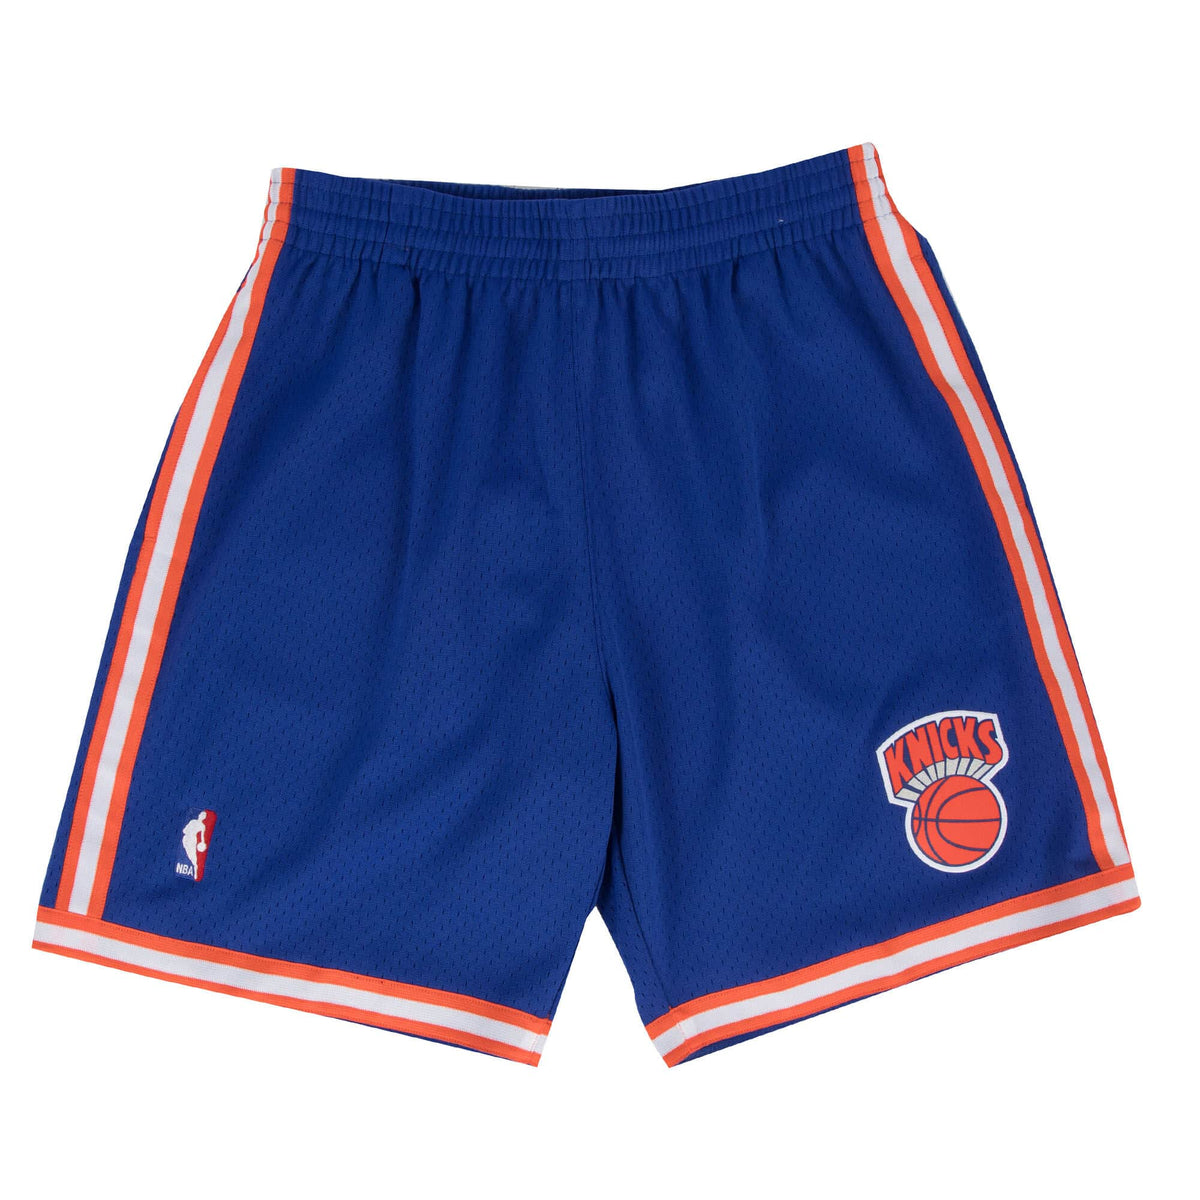 tiered tulle skirt with leggings Men NBA New York Knicks Swingman Short Royal 1991 SMSH18241NYKB91 - SHORTS - Canada